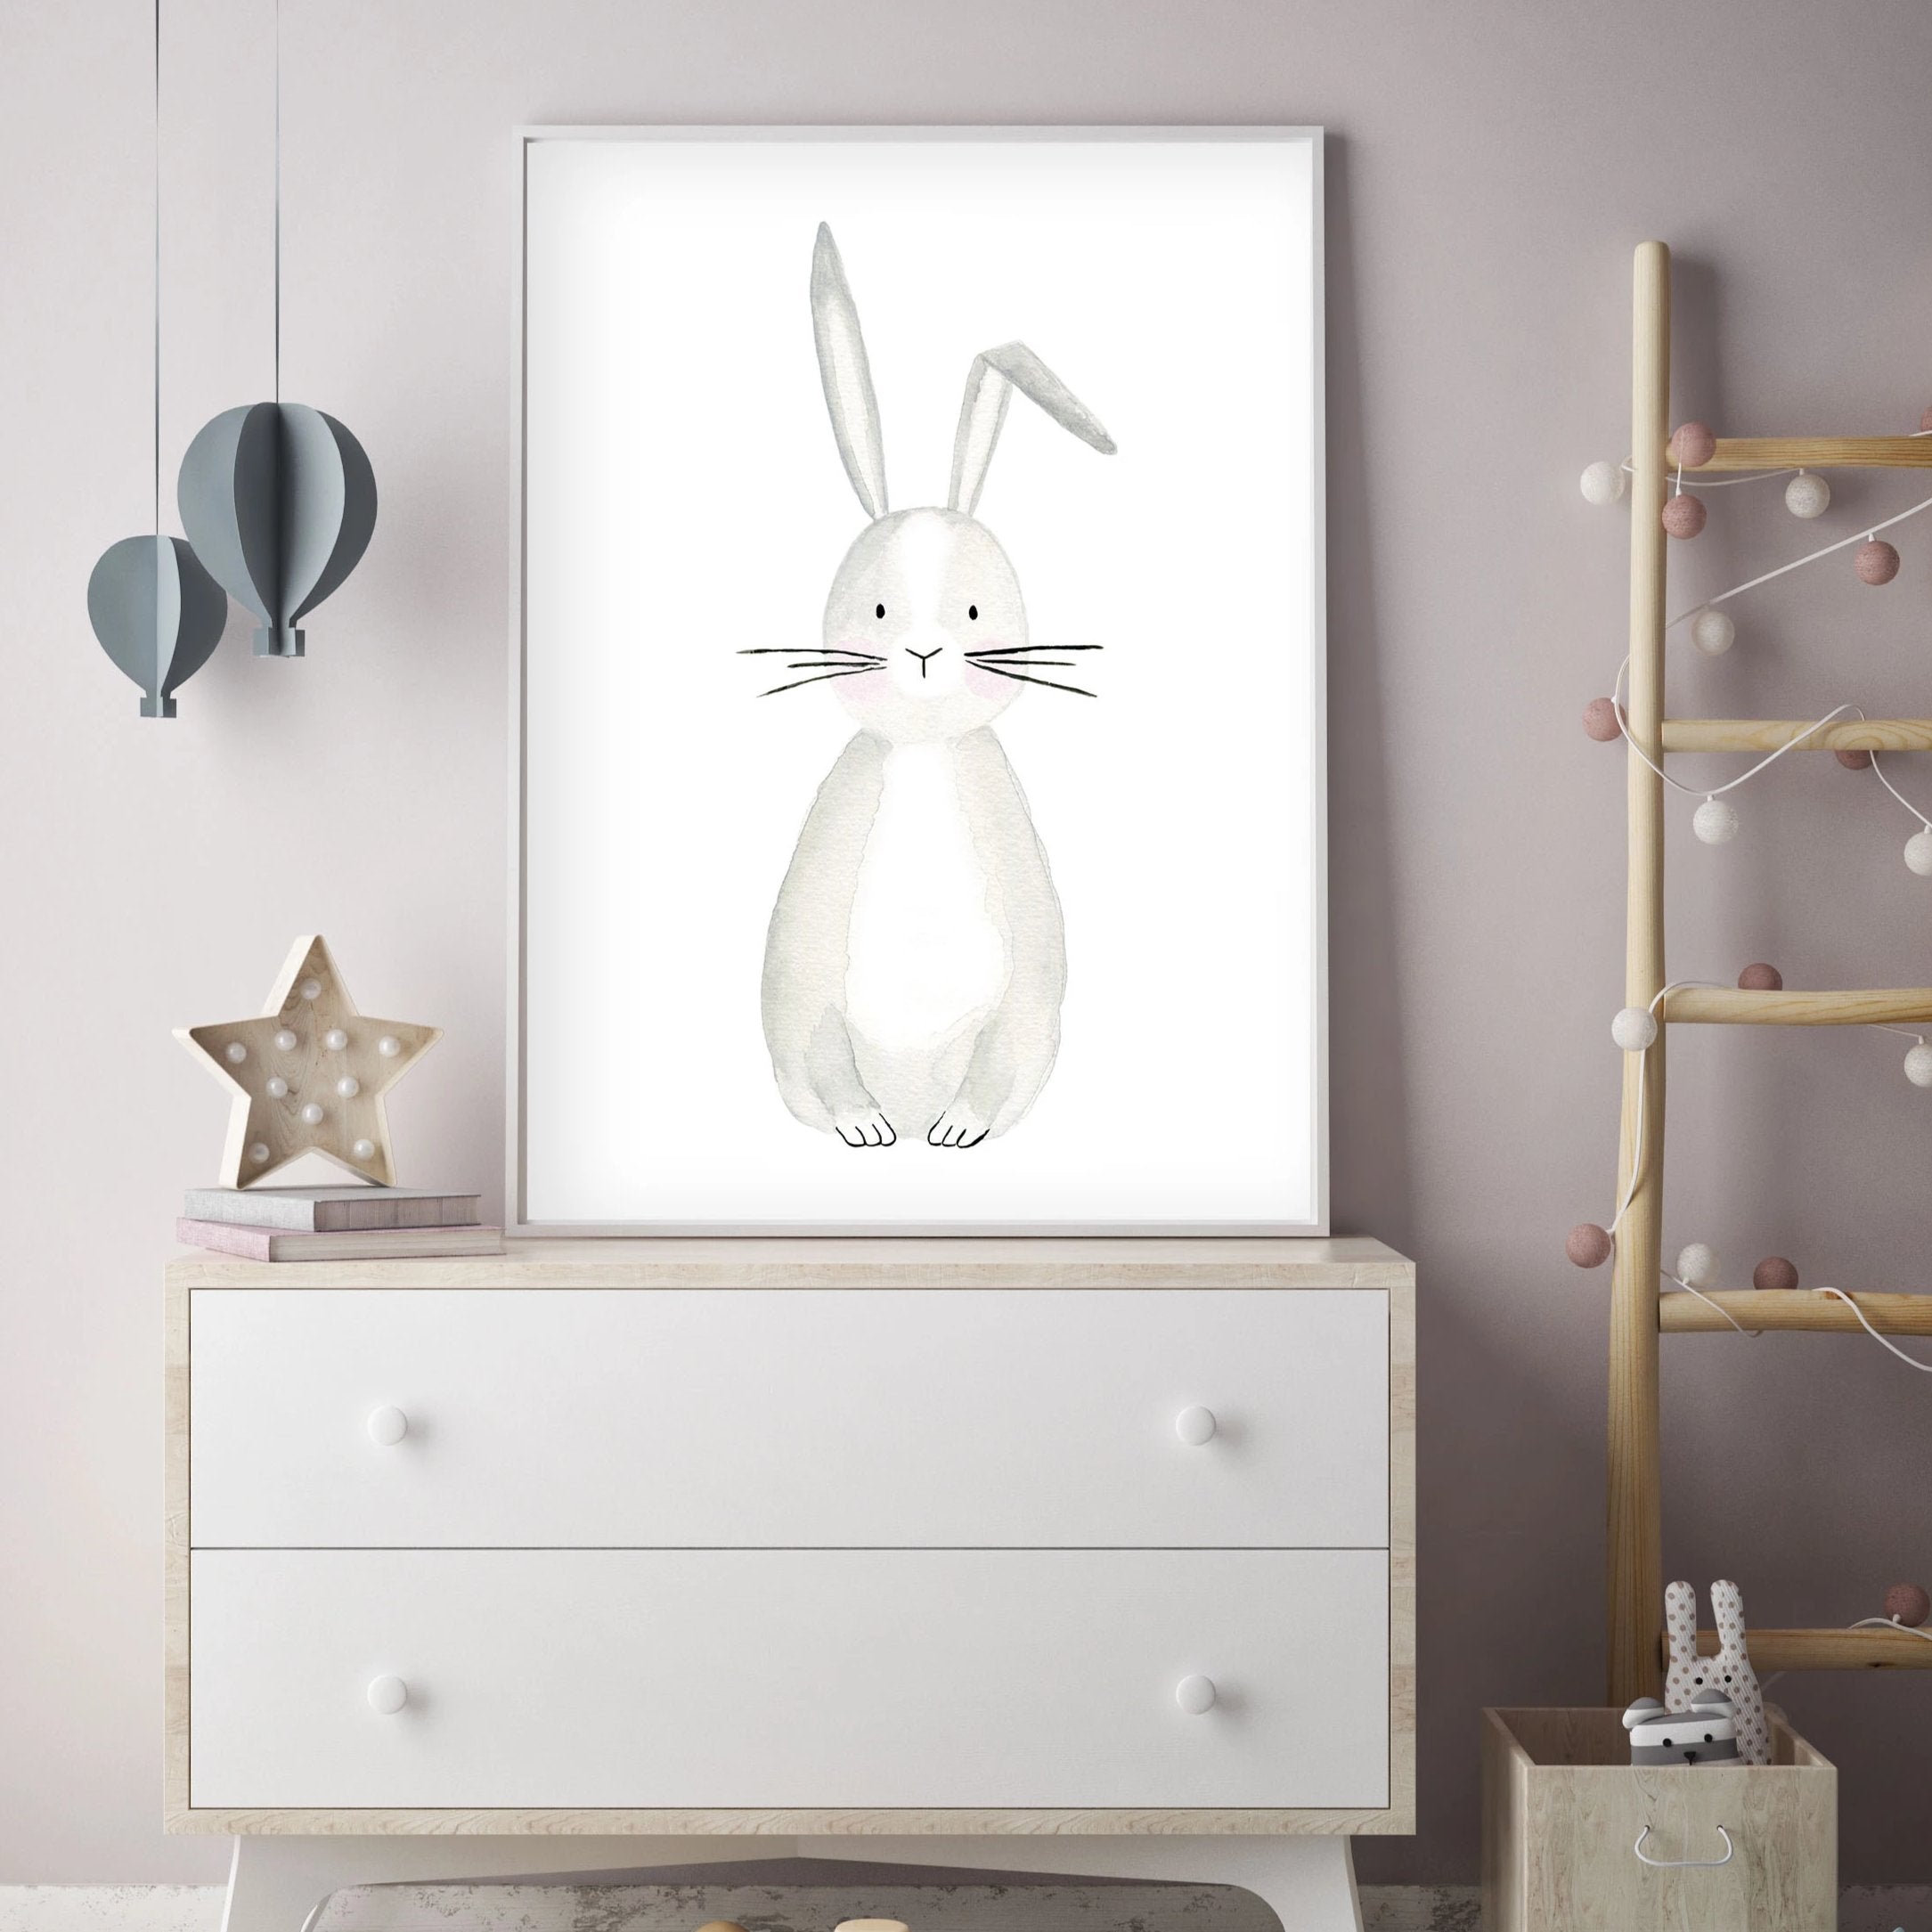 Bob the Bunny - Woodland Nursery wall art - The Small Art Project